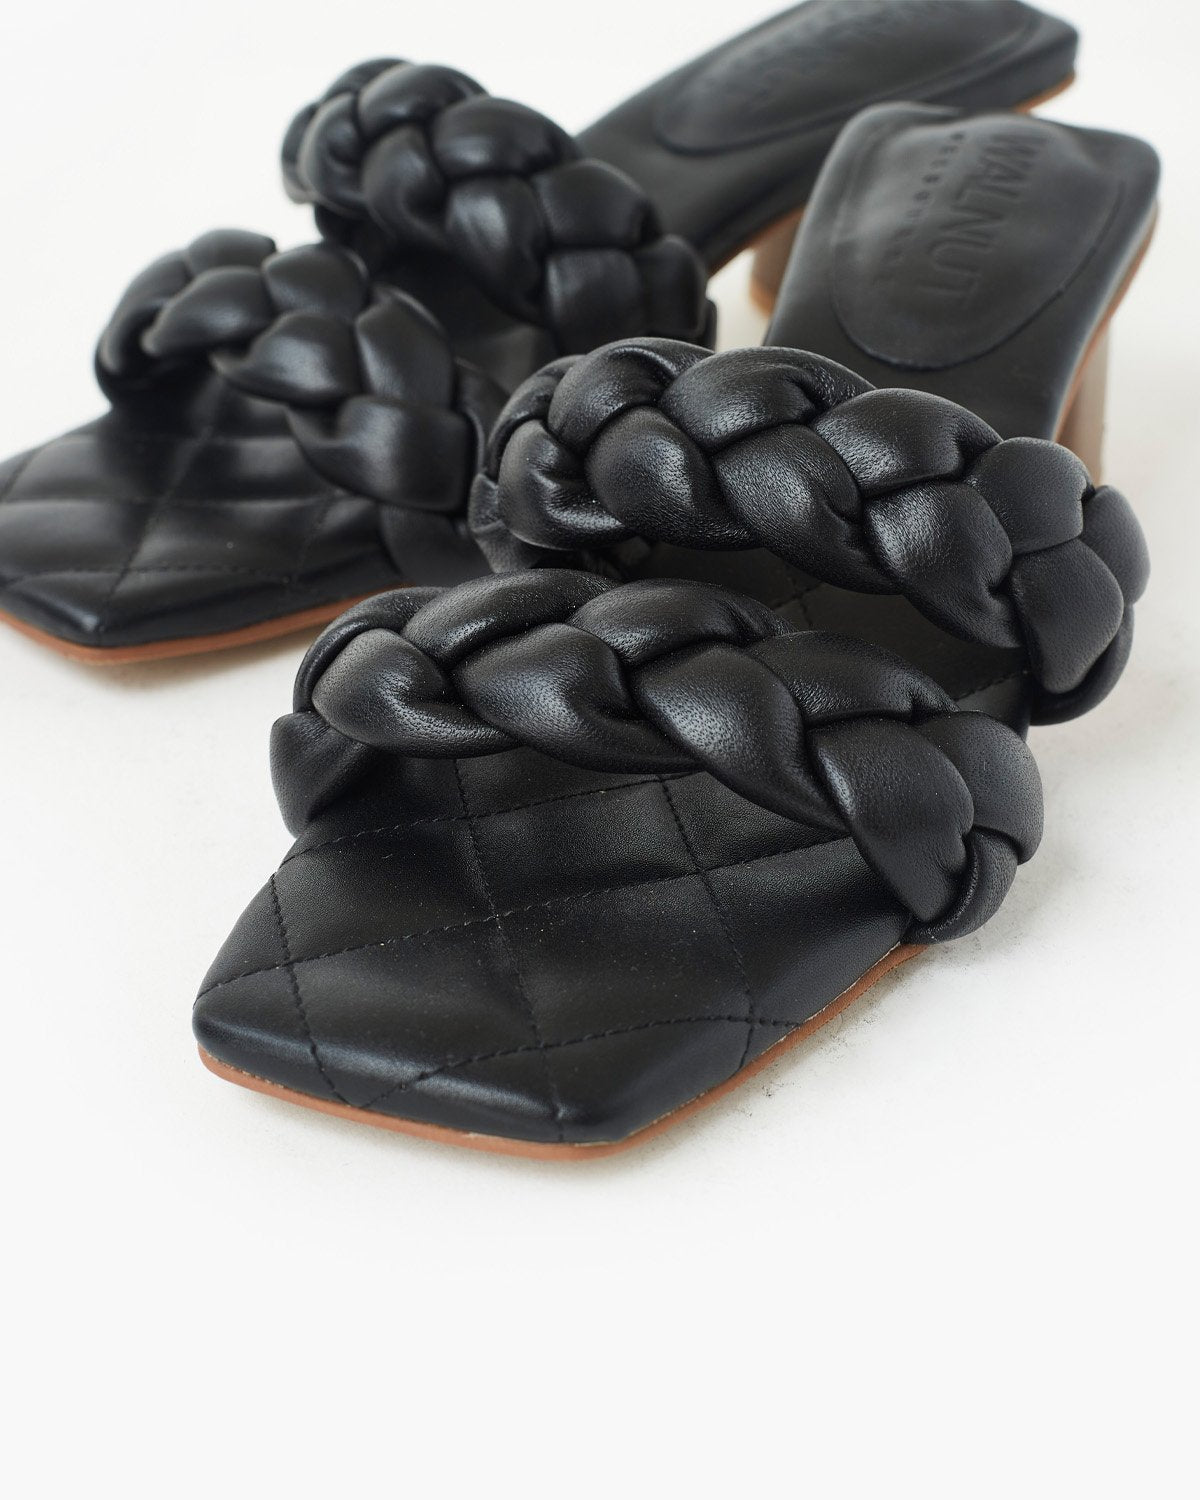 ILLY LEATHER HEEL - WALNUT MELBOURNE - 36, 37, 38, 39, 40, 41, 42, BLACK, evening, Evening Shoes, forest, SLING BACK, Sling Back Heels, womens footwear - Stomp Shoes Darwin